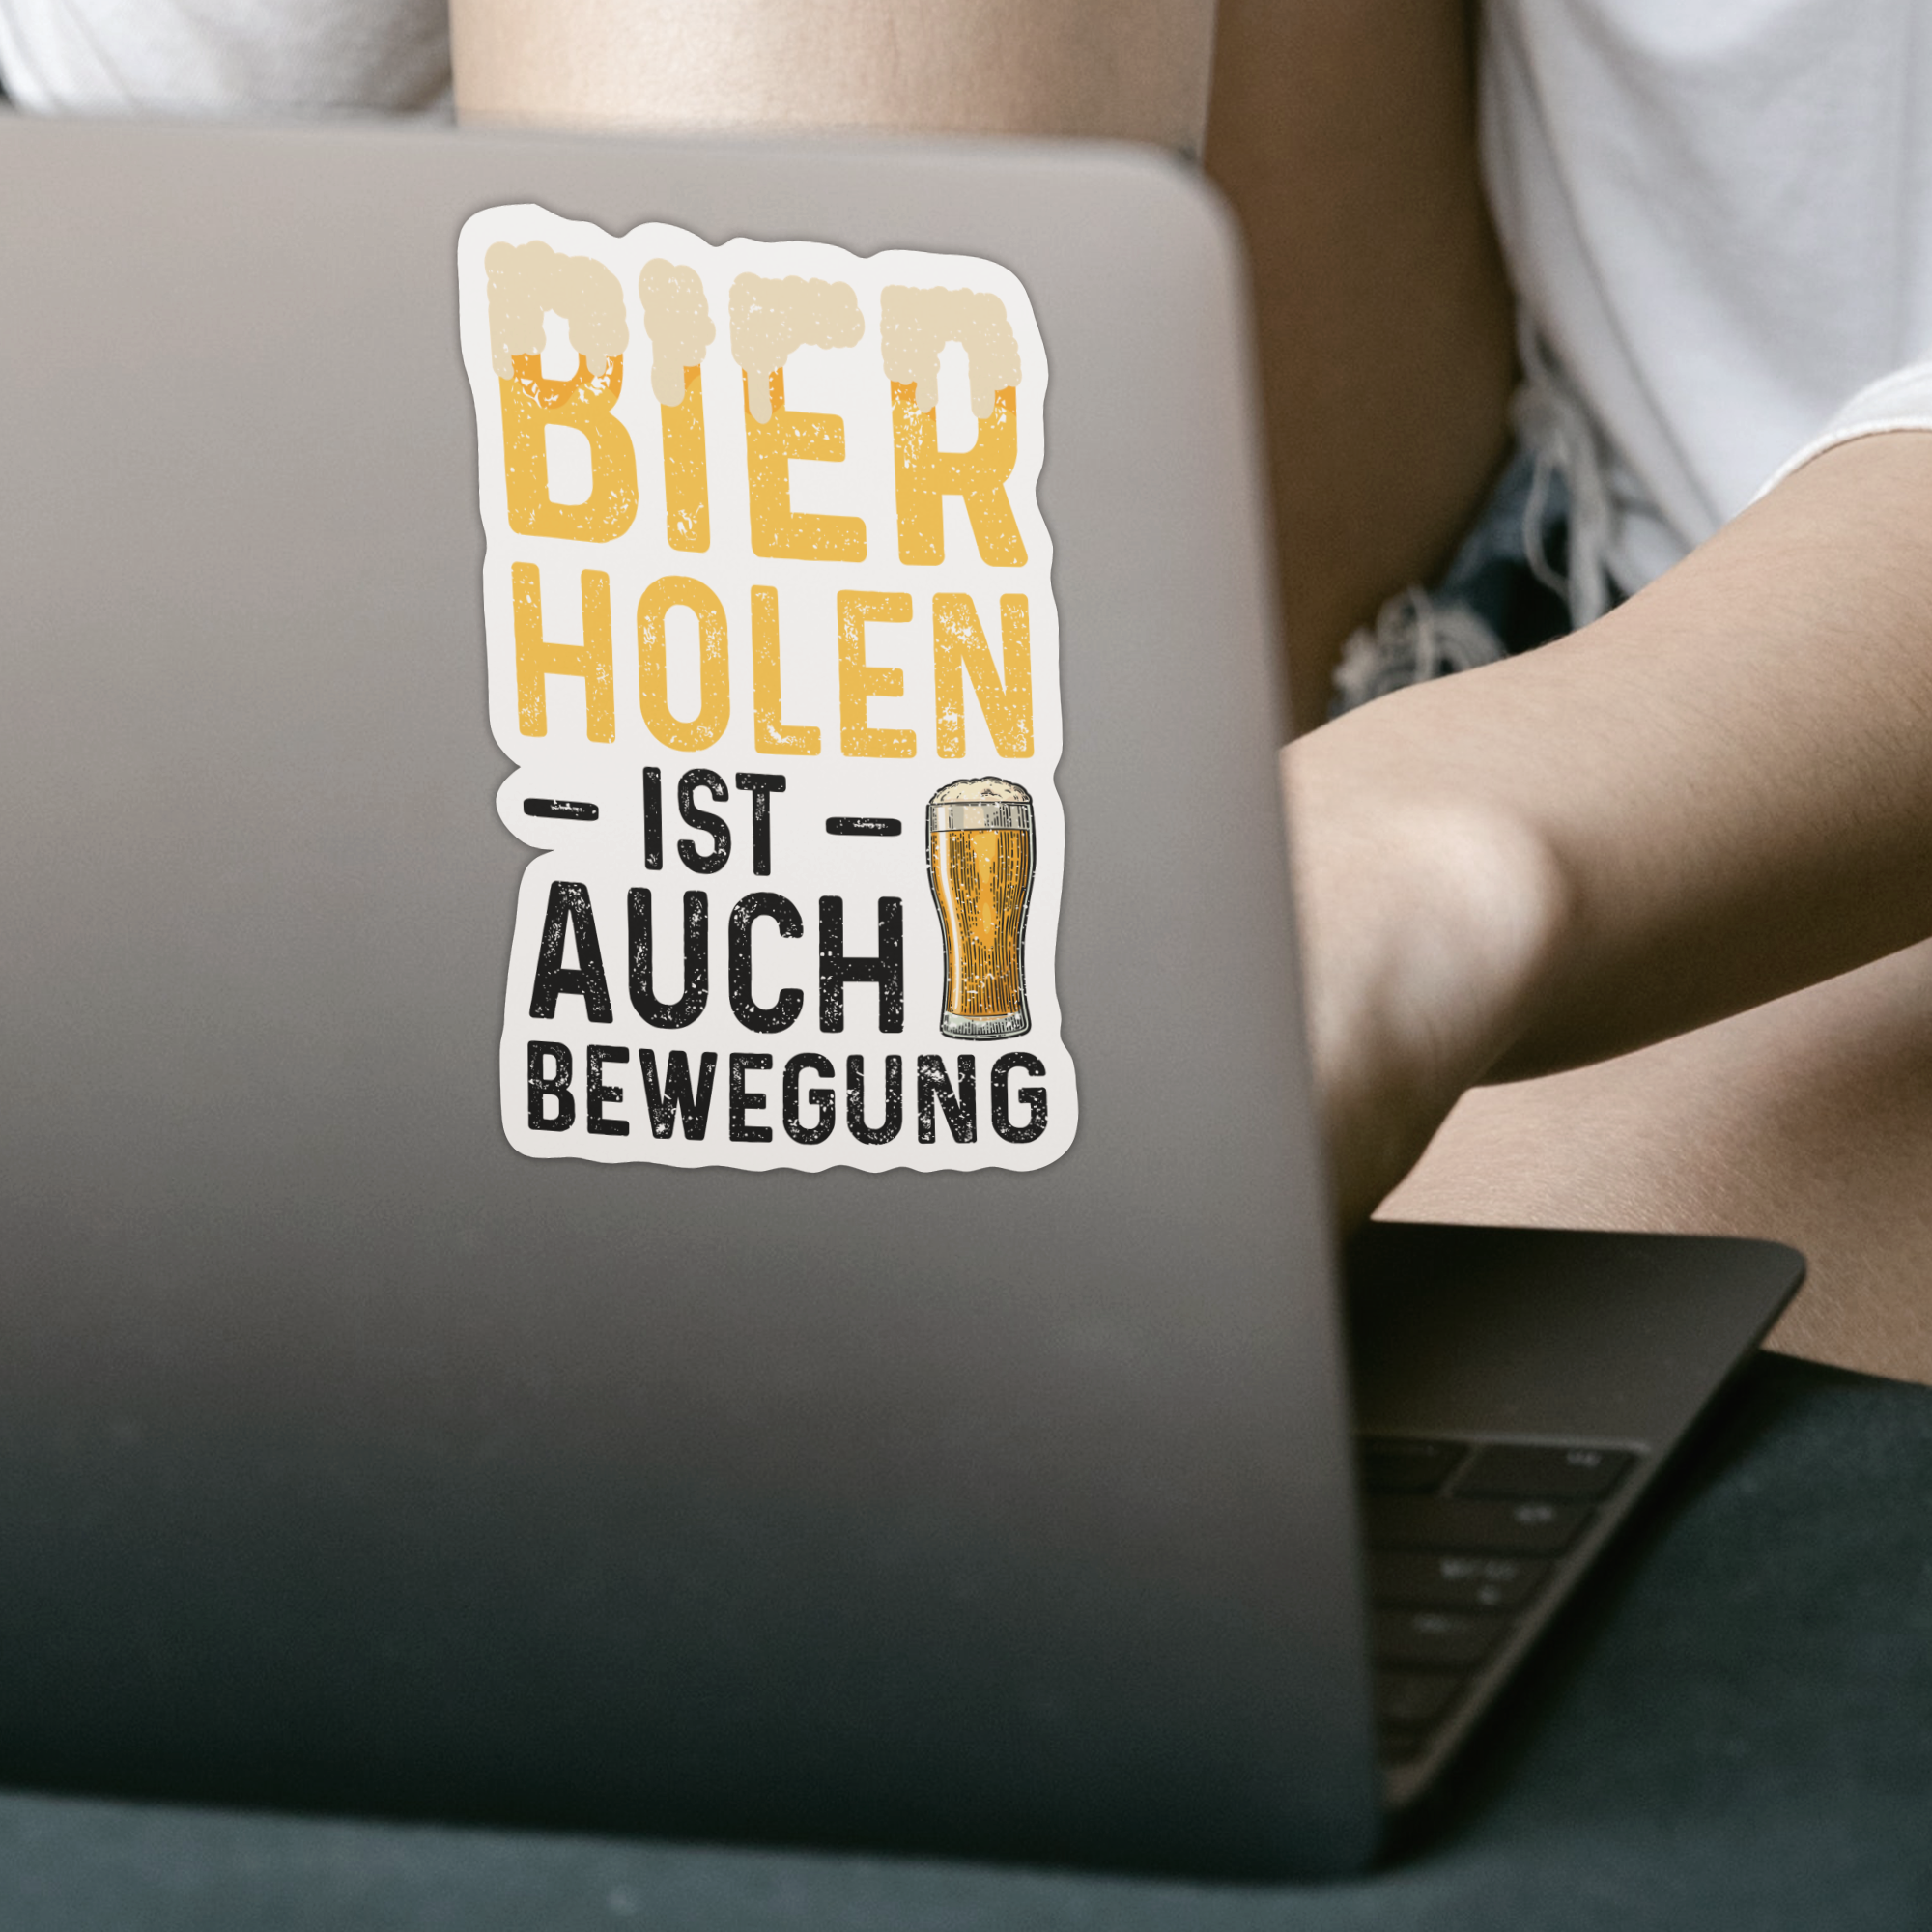 Bier Holen Ist Auch Bewegung Sticker - DESIGNSBYJNK5.COM